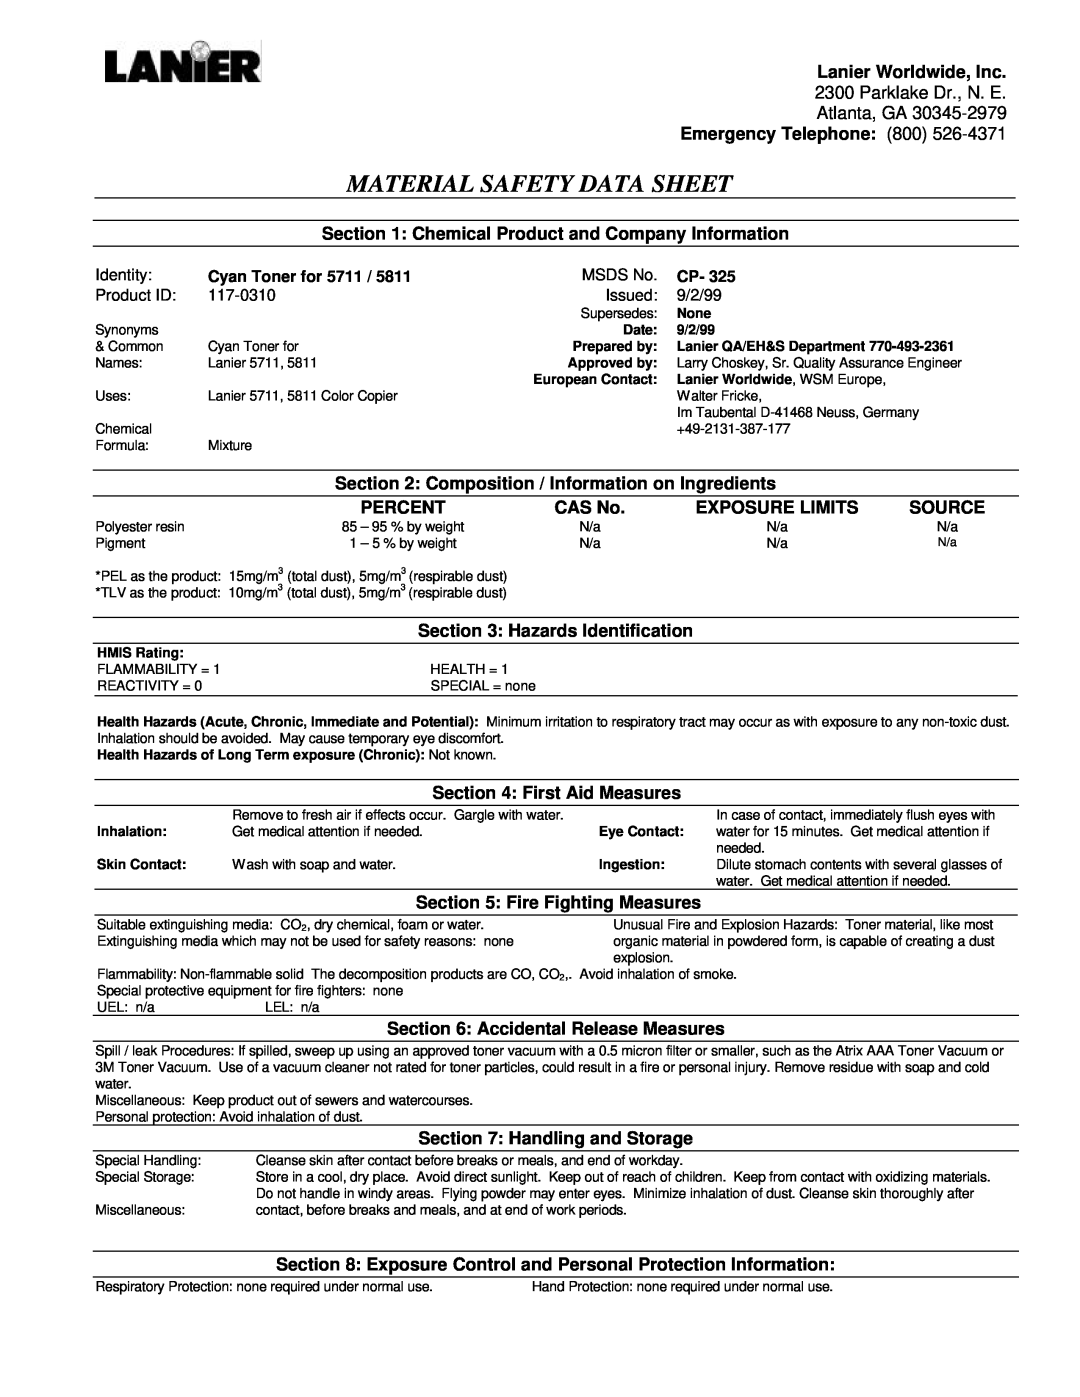 Lanier 5711, 5811 manual Material Safety Data Sheet 